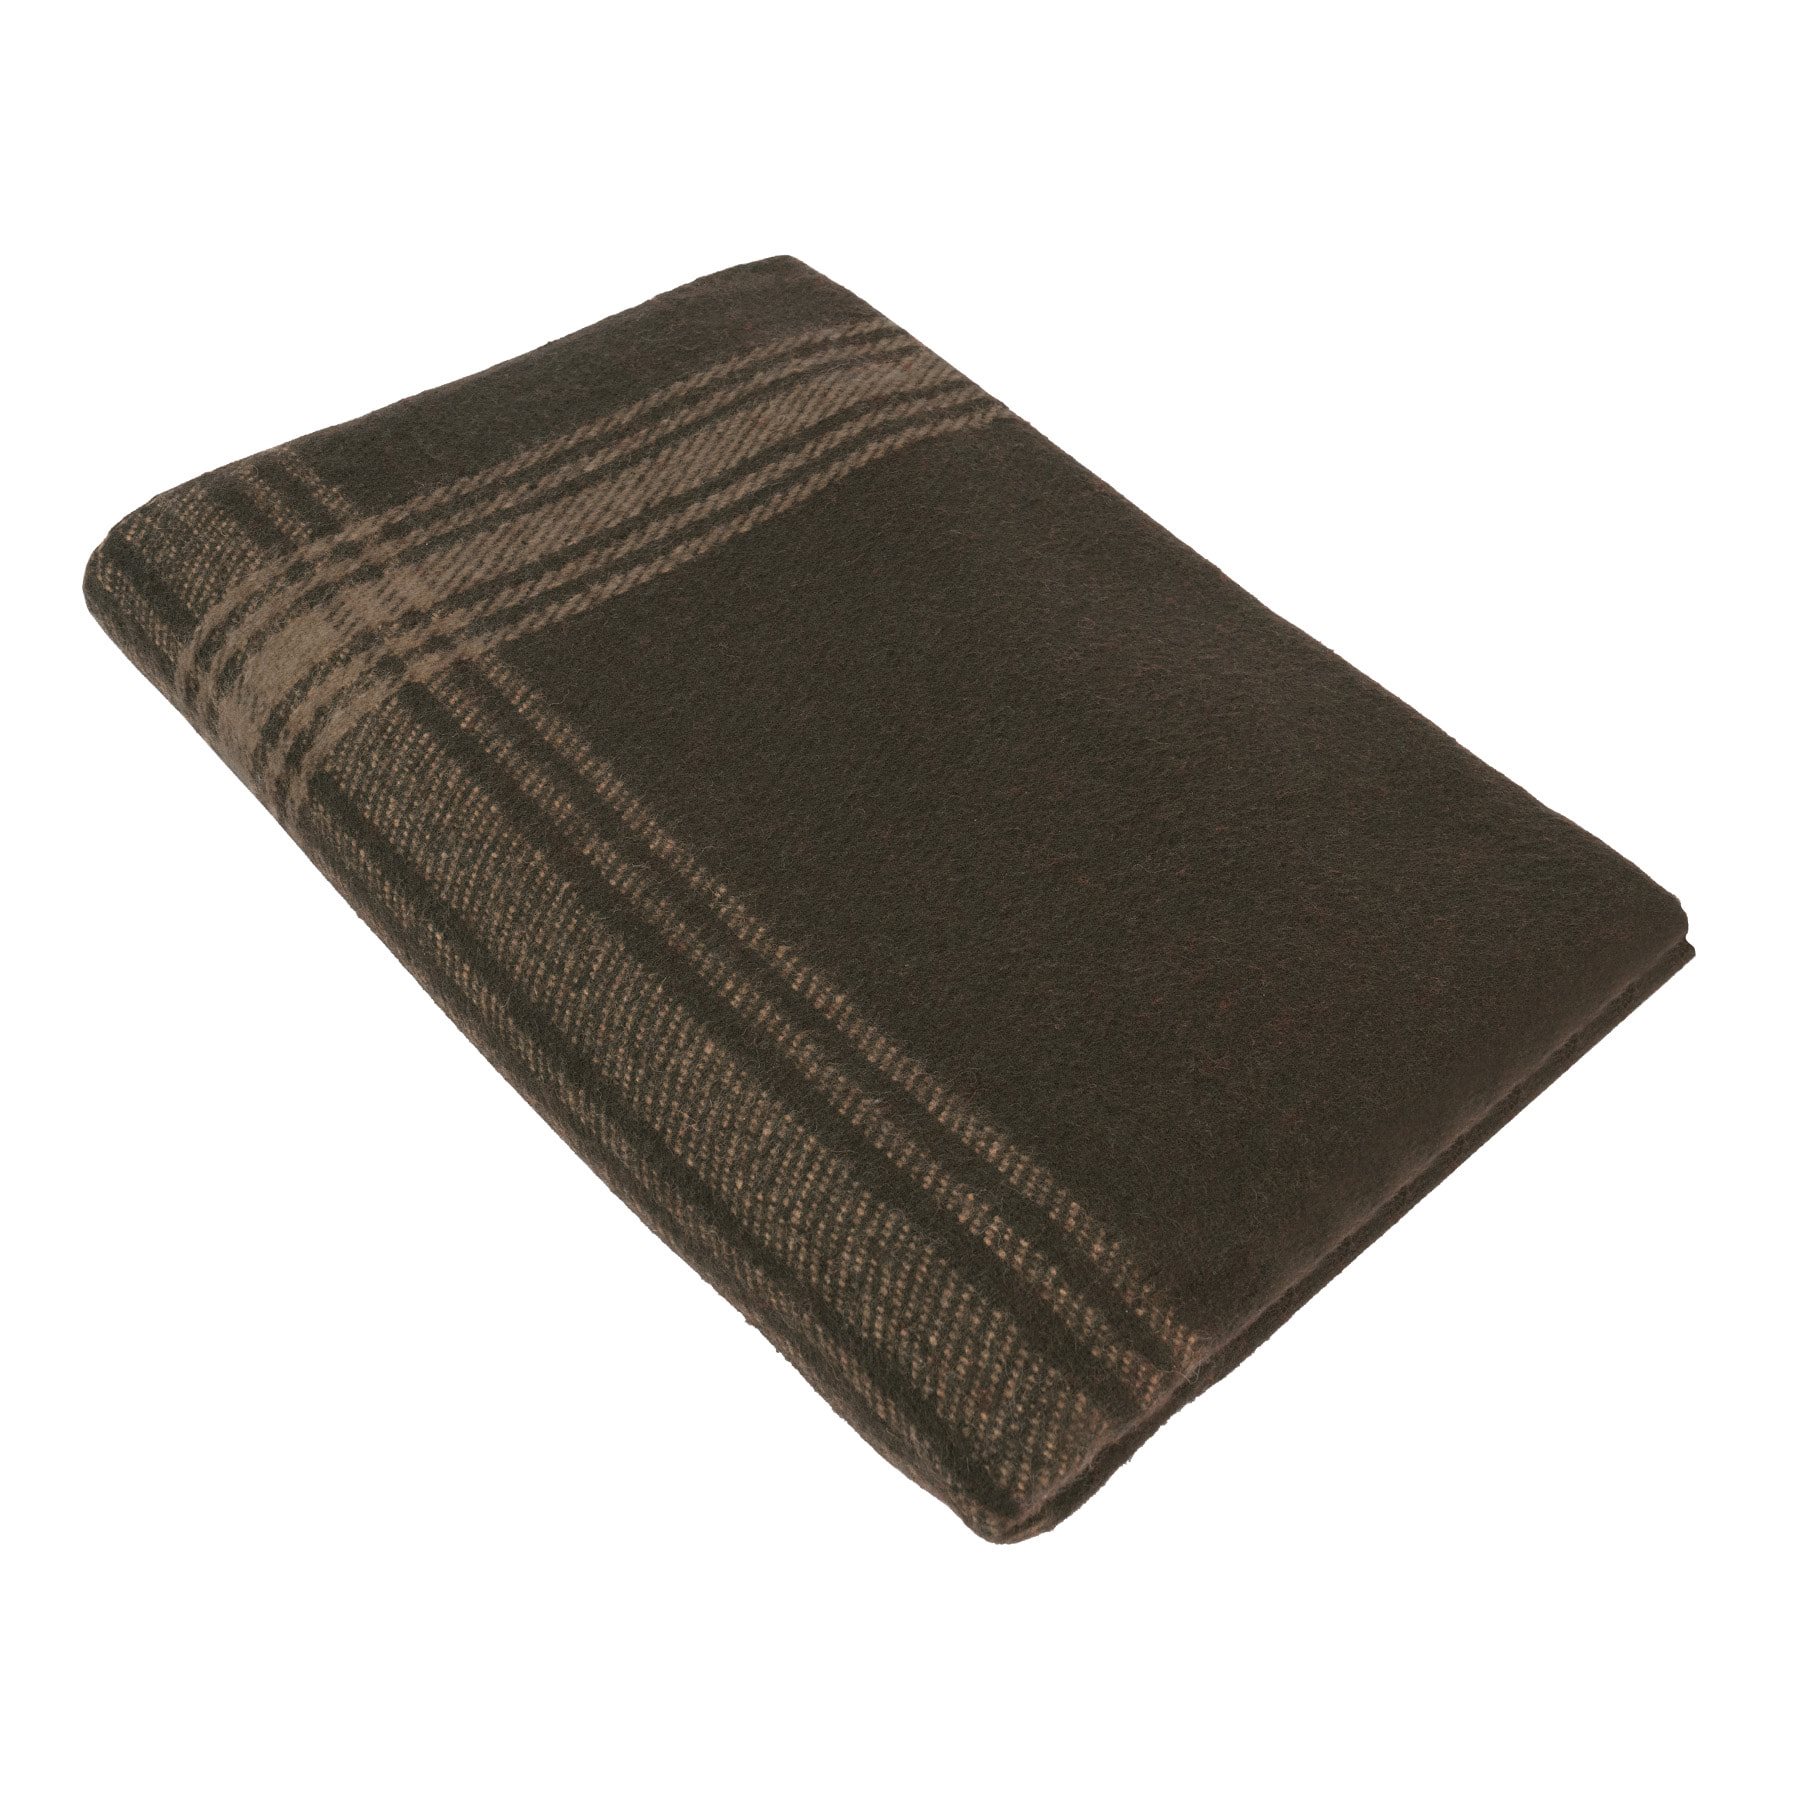 Striped Wool Blanket BROWN/TAN ROTHCO 11096 L-11